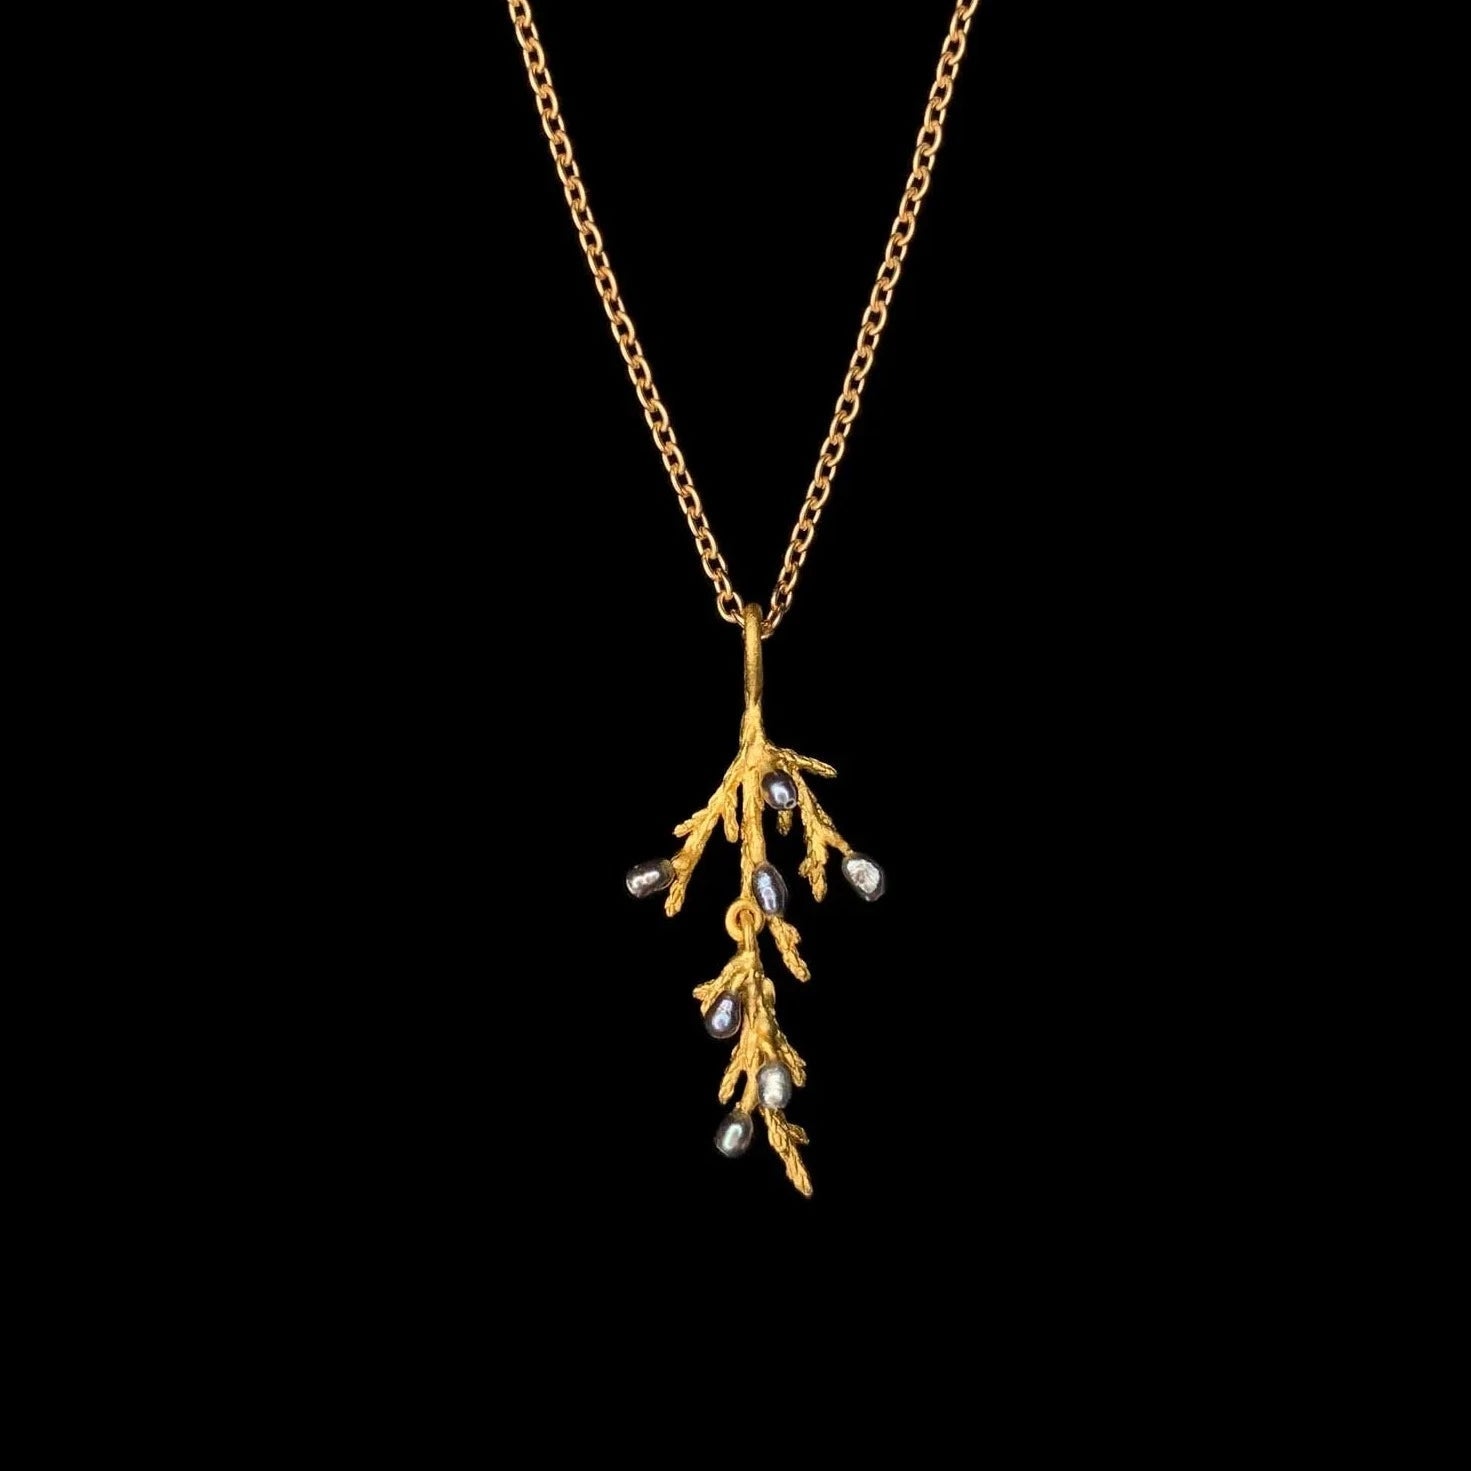 Juniper Necklace - The Nancy Smillie Shop - Art, Jewellery & Designer Gifts Glasgow